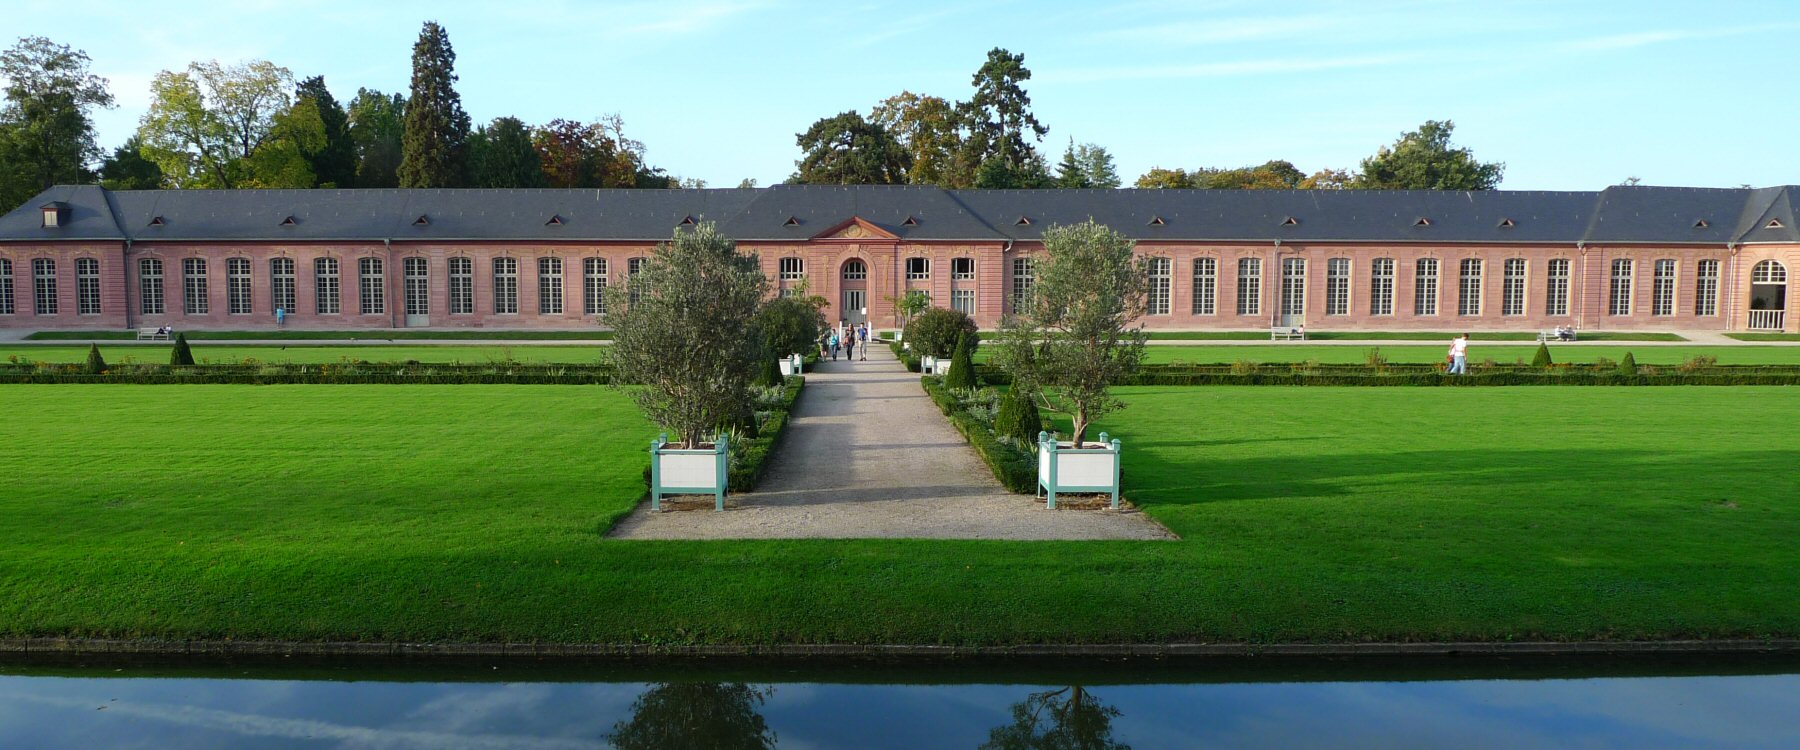 Schwetzinger Schlossgarten, Orangerie